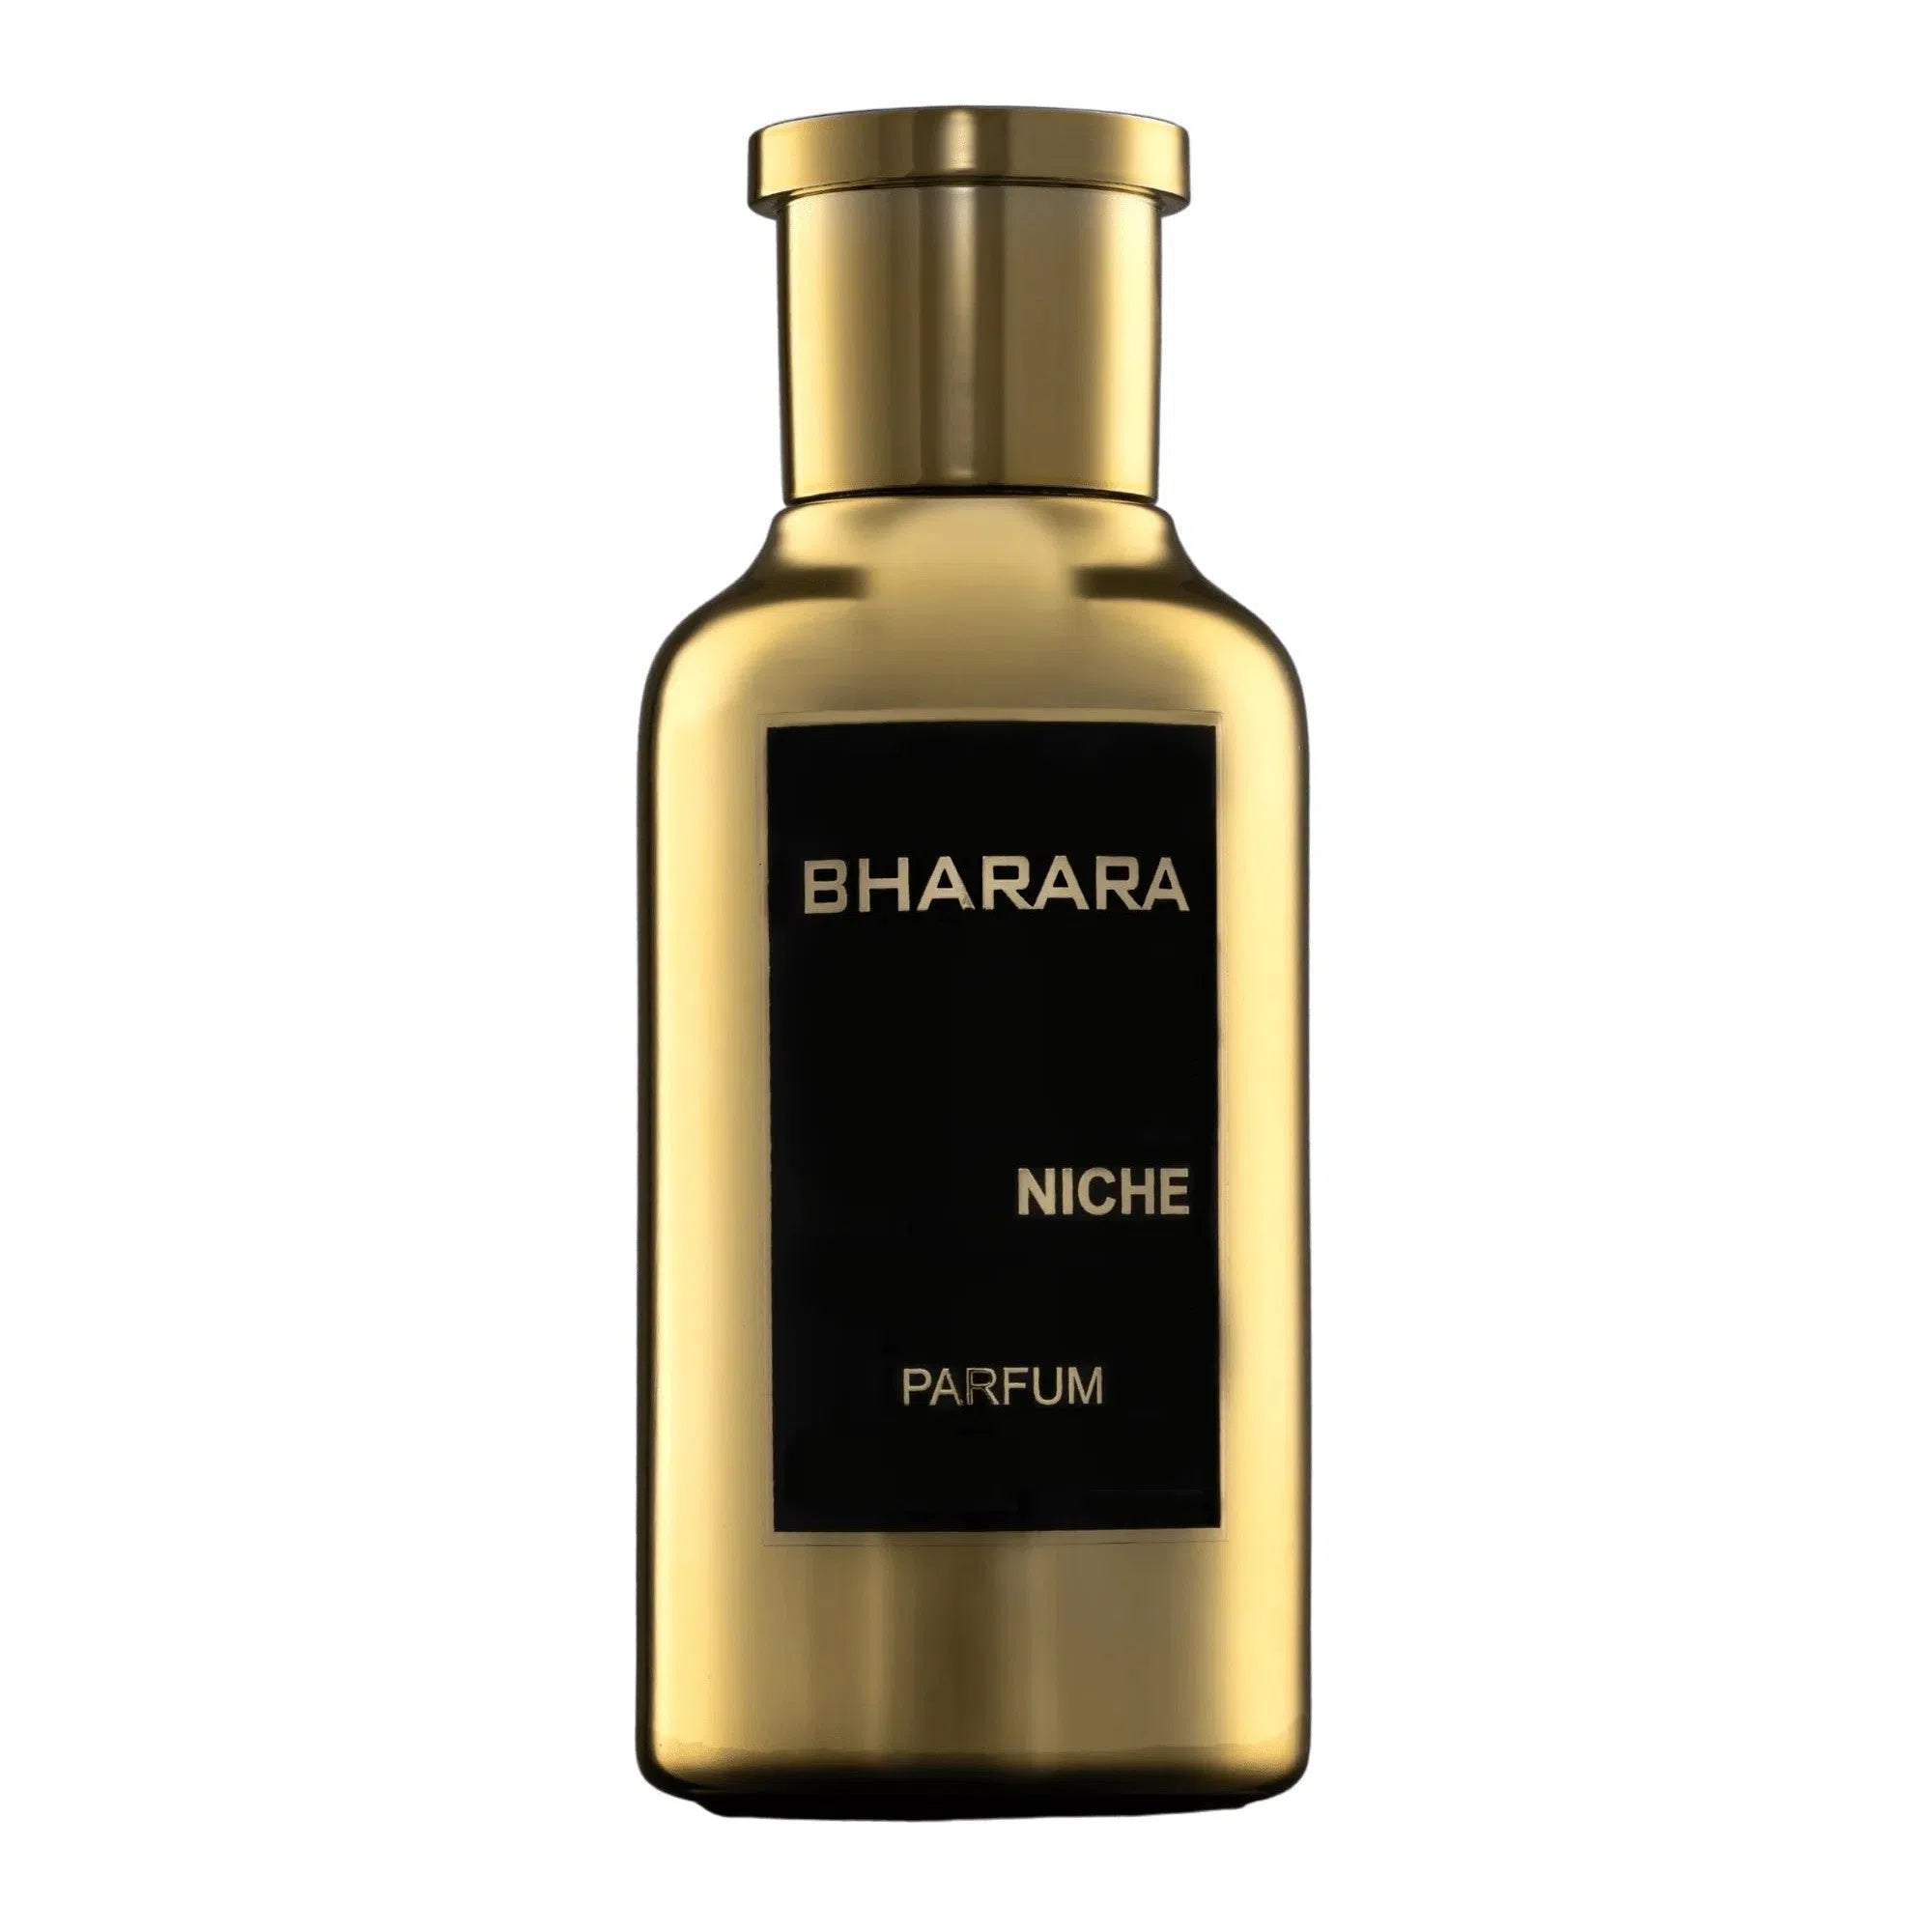 Perfume Bharara Niche Parfum (M) / 200 ml - 019213947705- Prive Perfumes Honduras